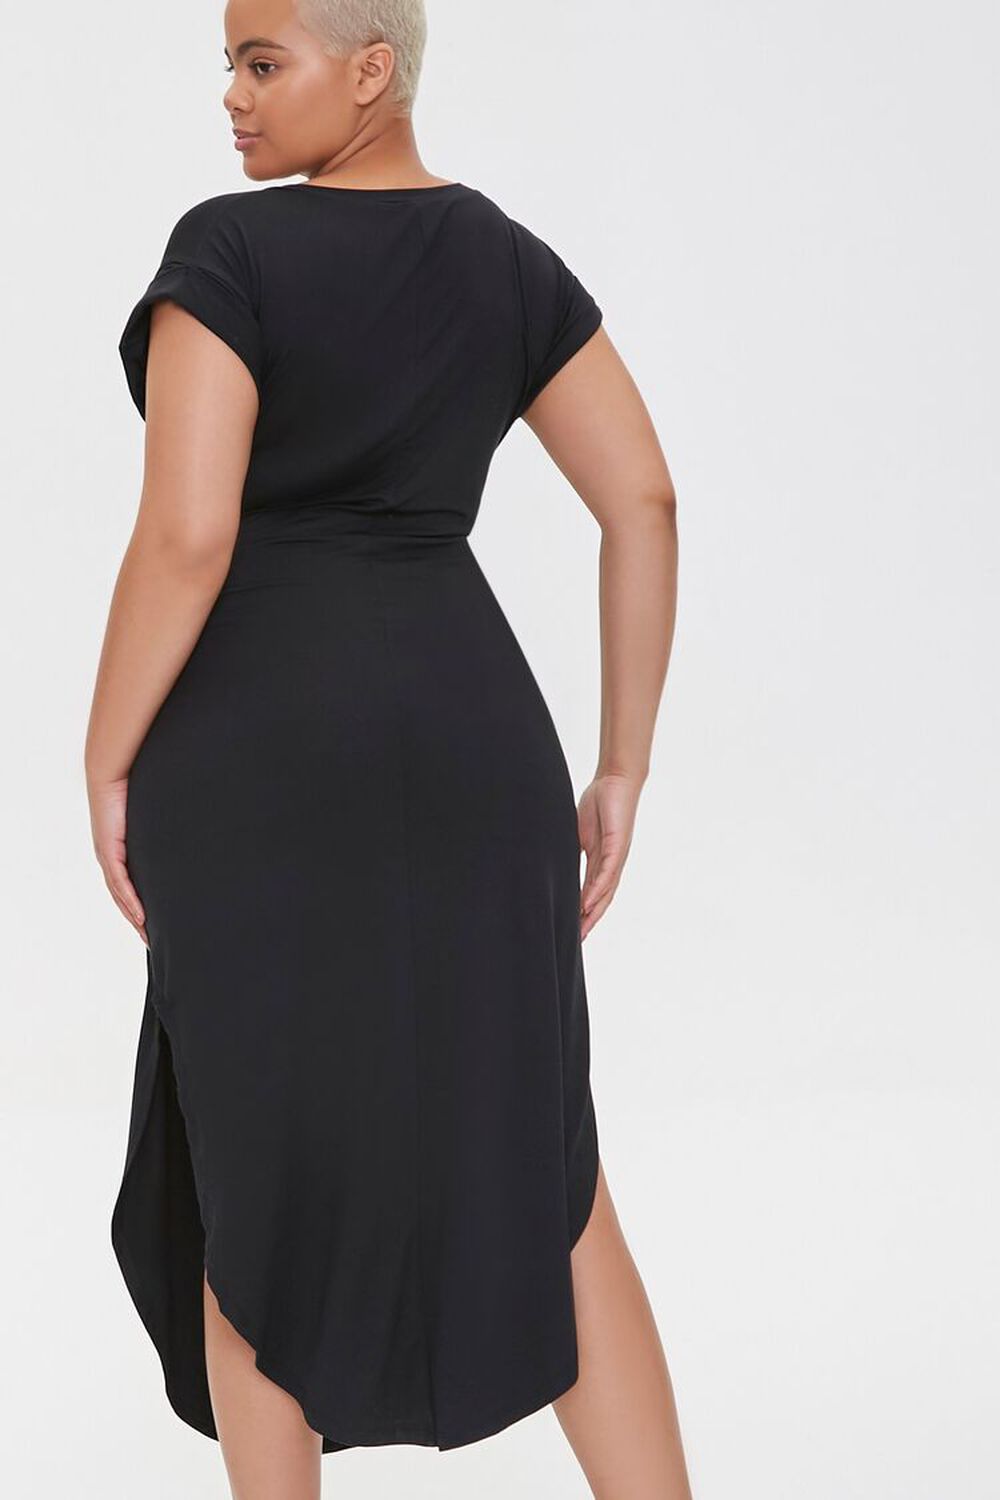 BLACK Plus Size Scoop-Hem Bodycon Dress, image 3